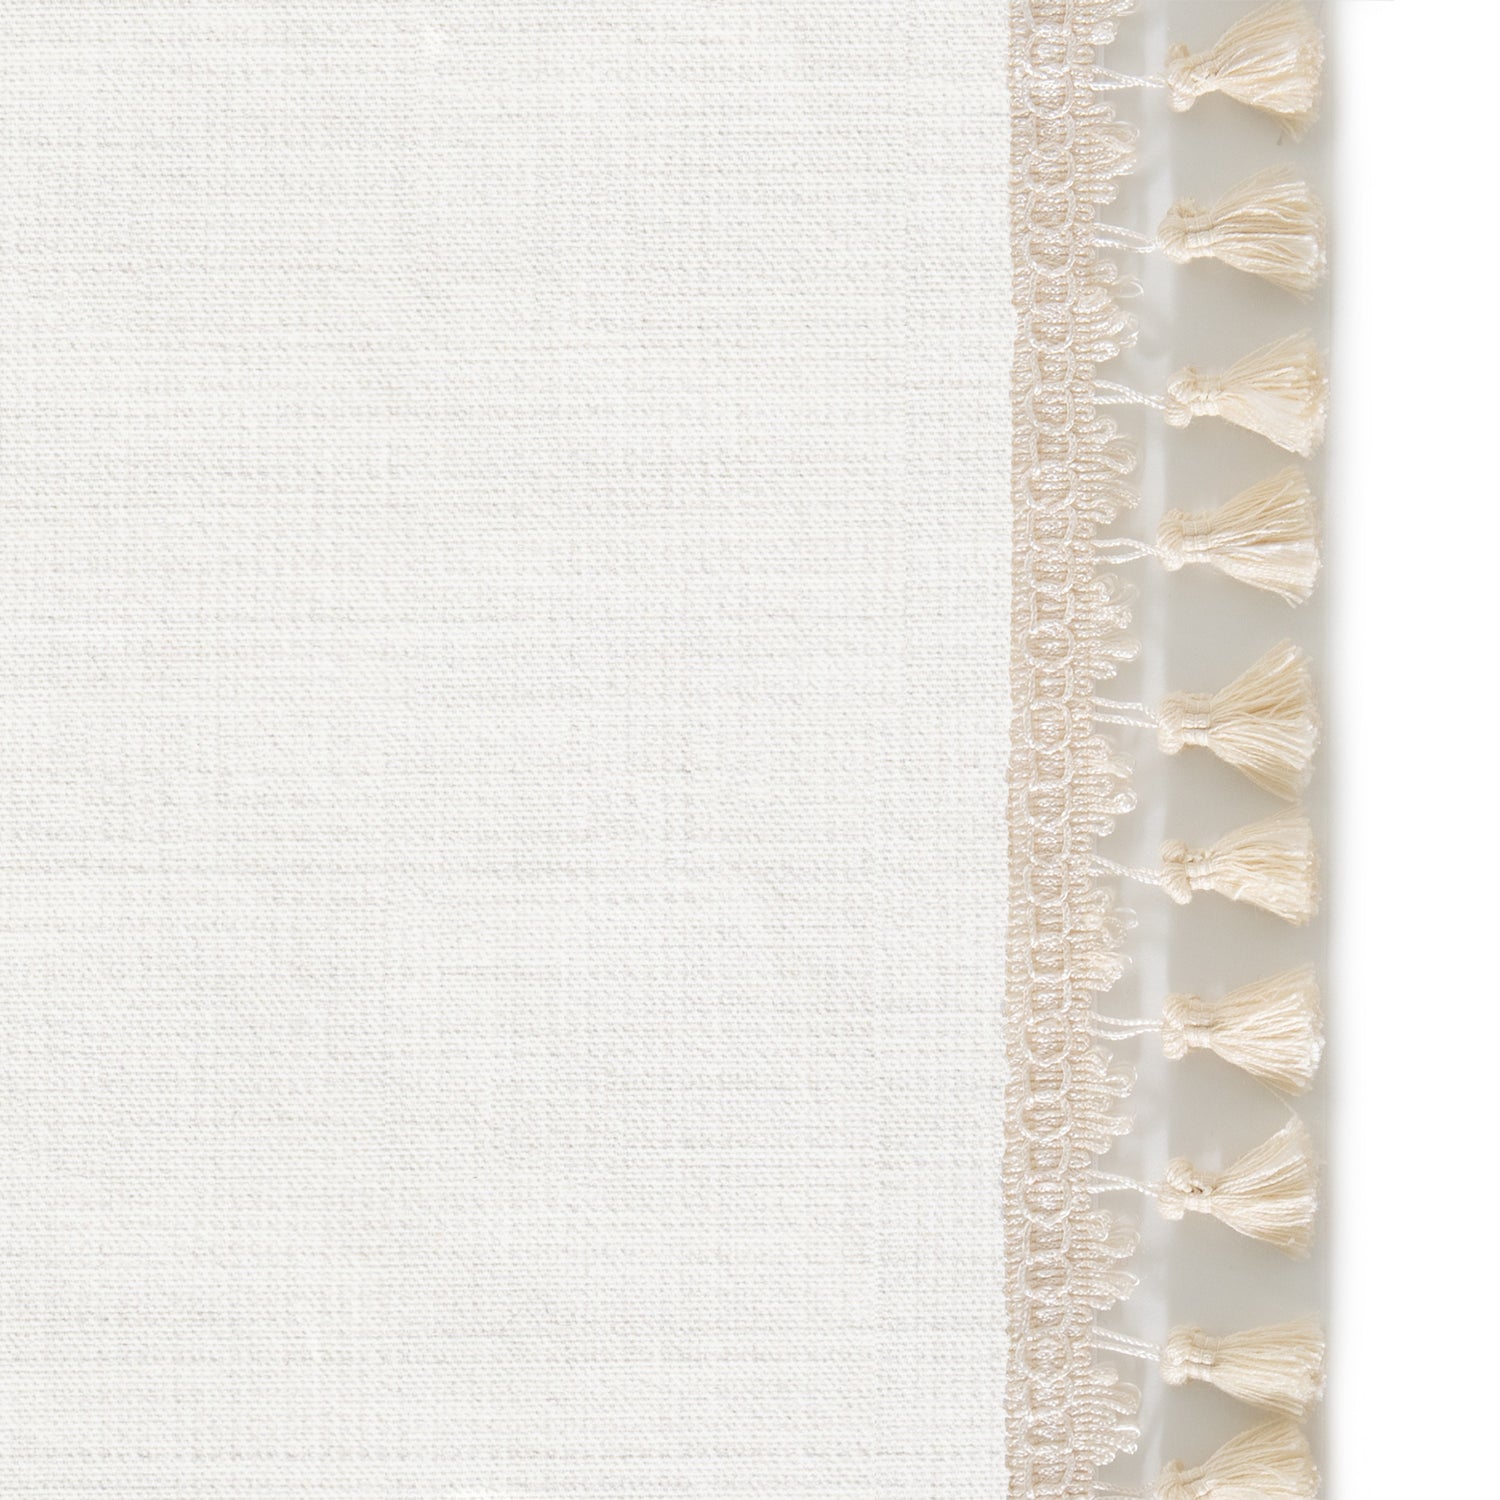 Upclose picture of Snow custom Whiteshower curtain with cream tassel trim